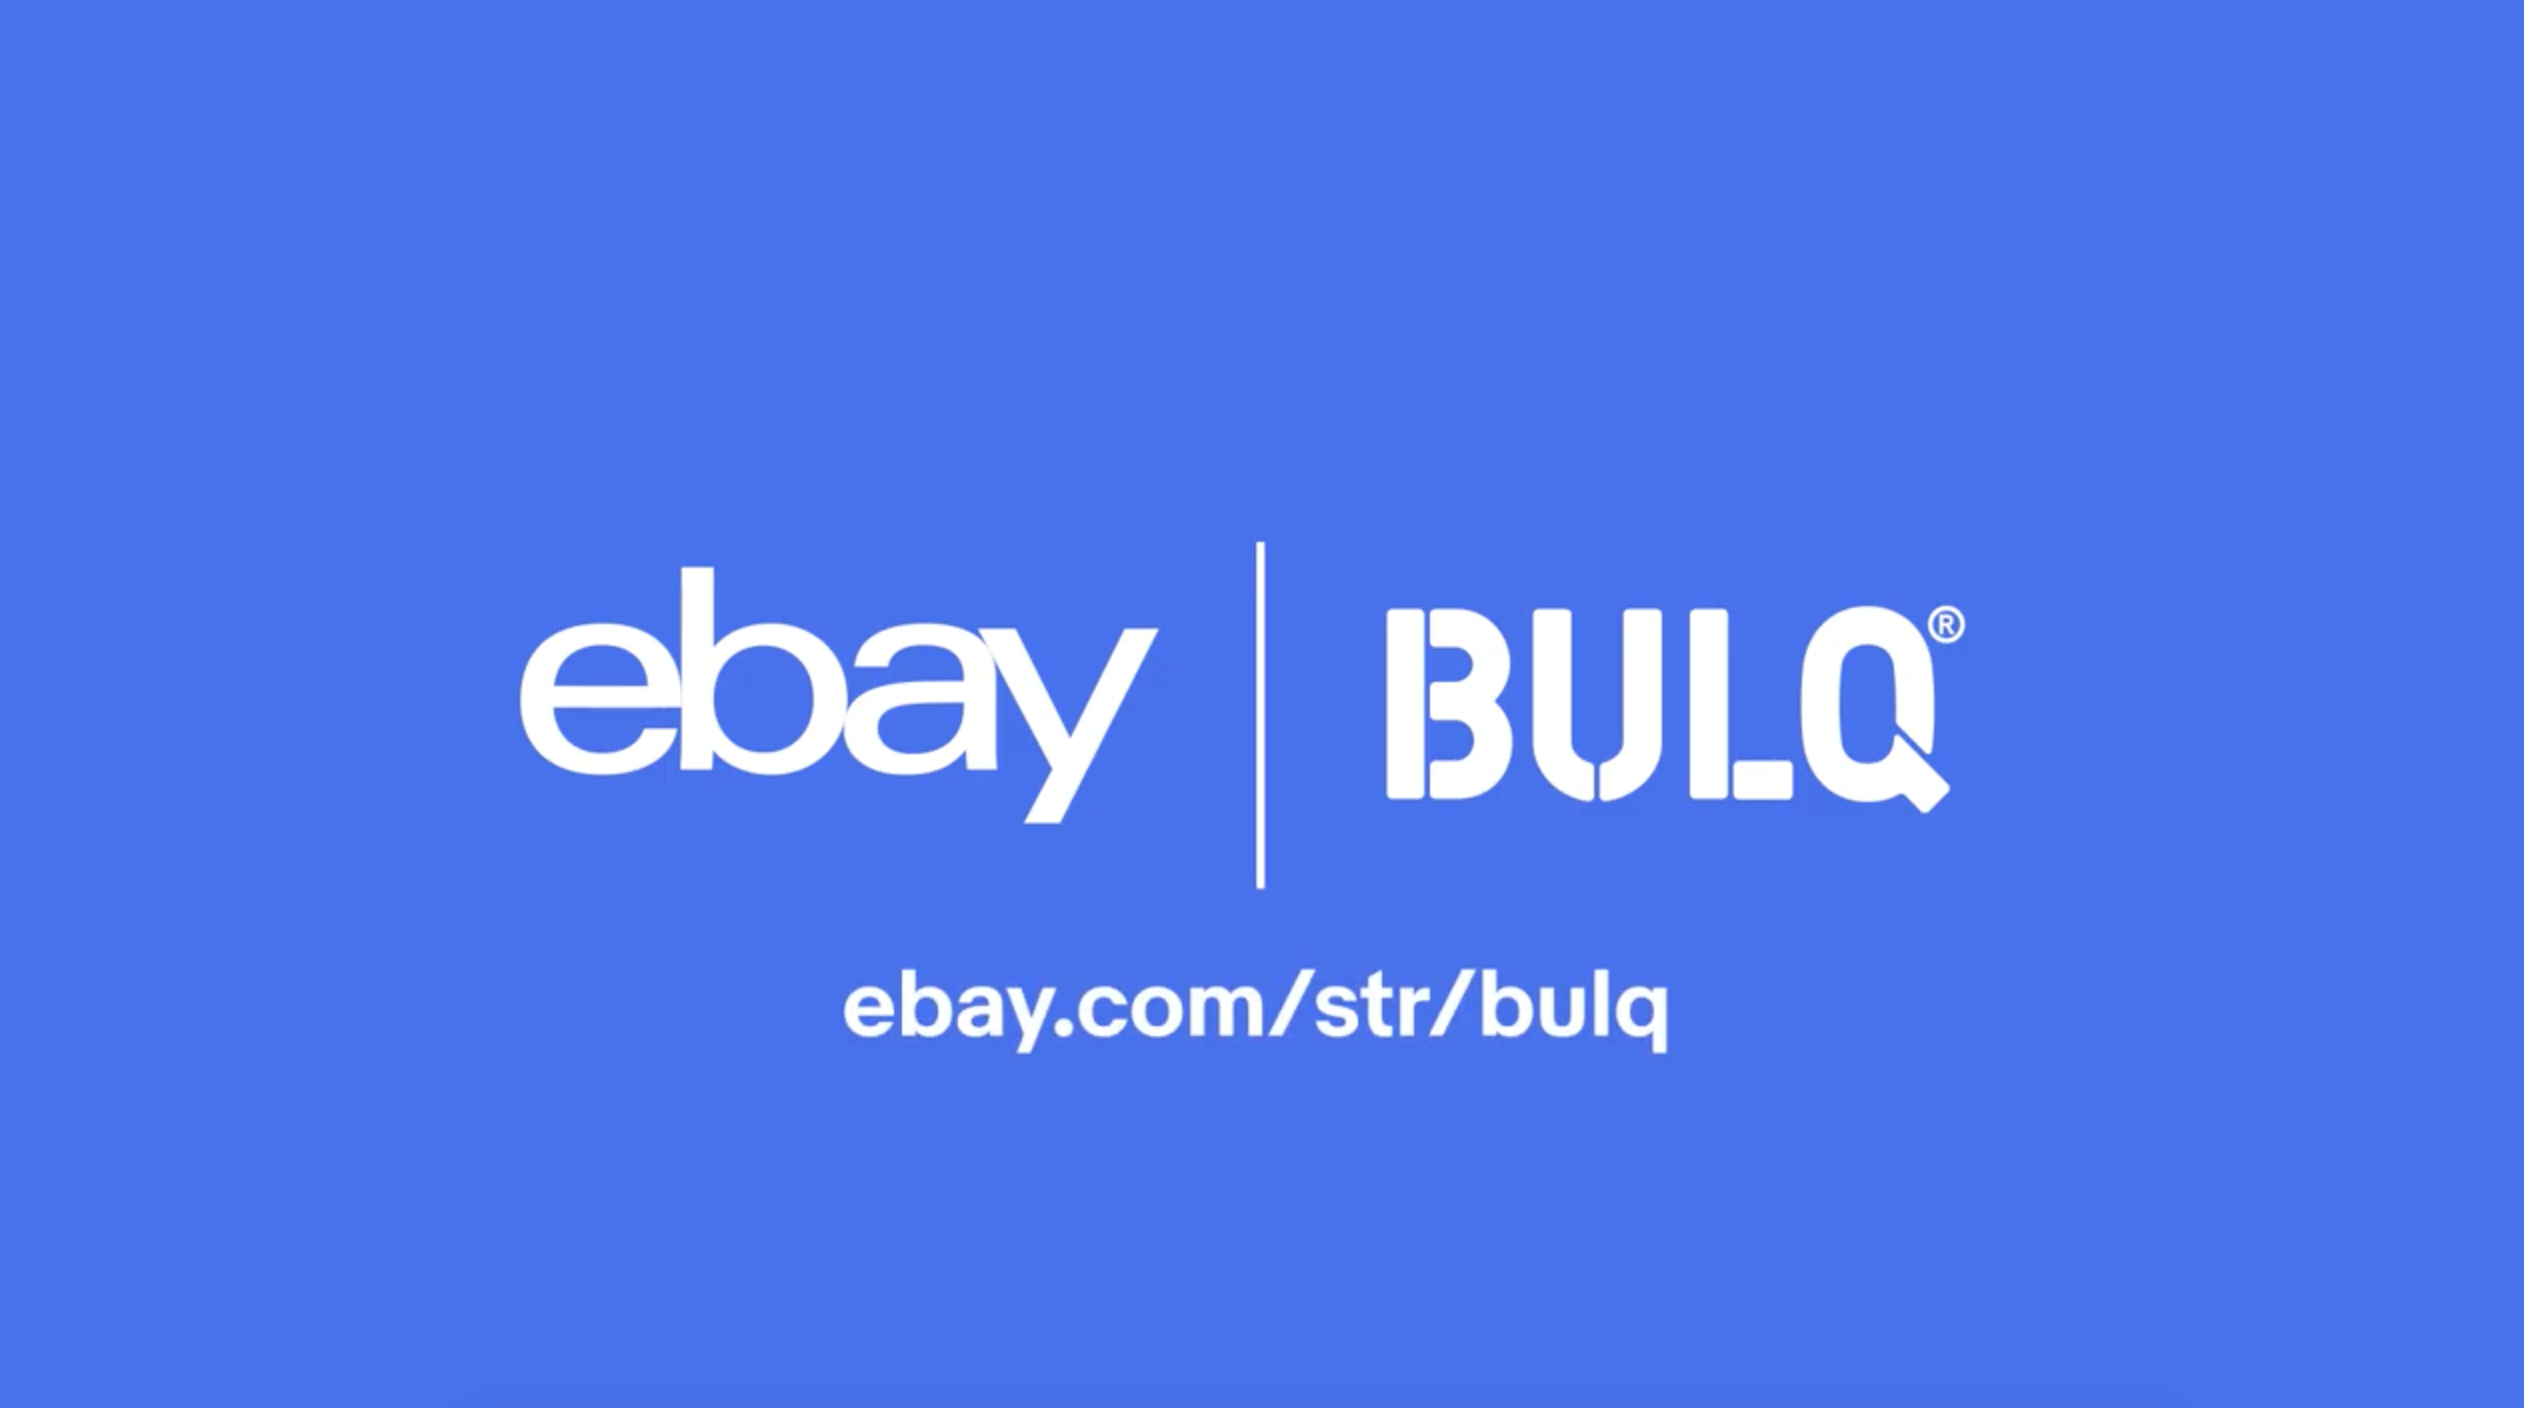 eBay and Optoro partnership creates BULQ on eBay